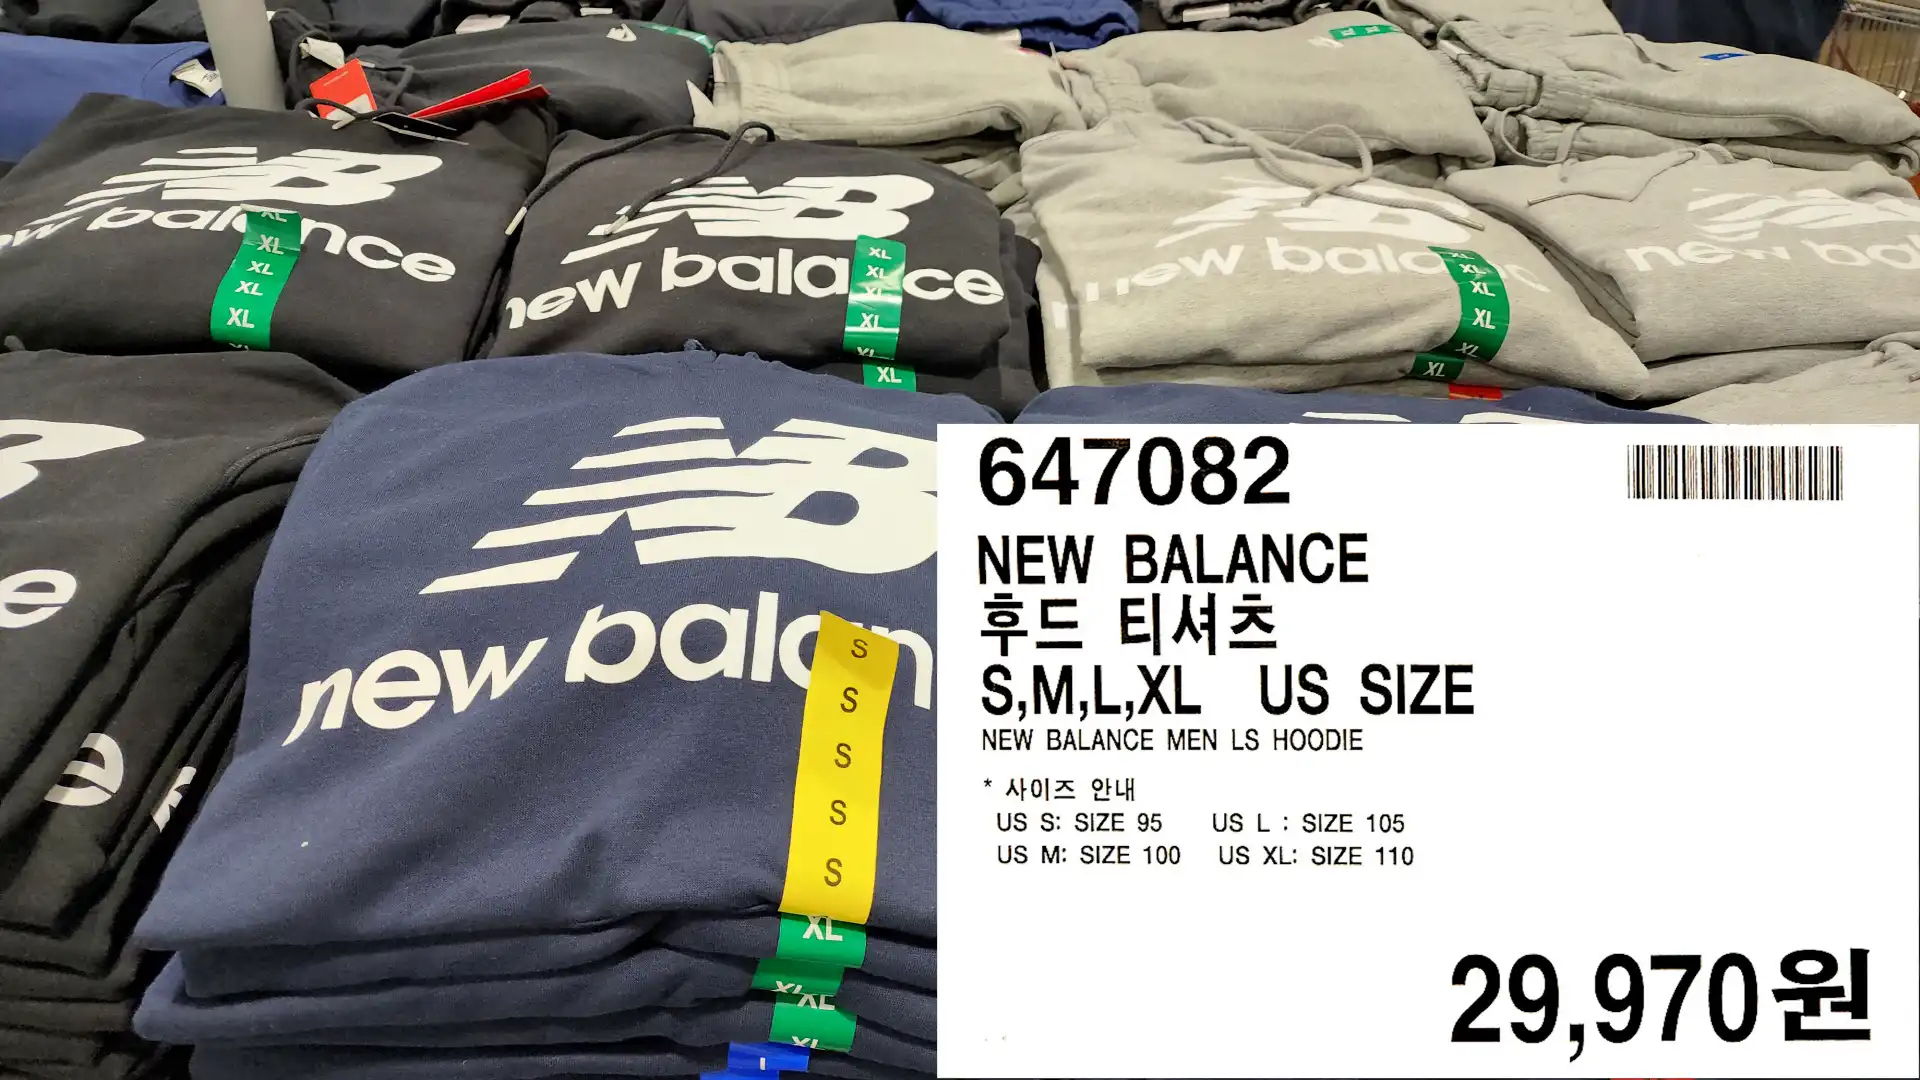 NEW BALANCE
후드 티셔츠
S&#44;M&#44;L&#44;XL US SIZE
NEW BALANCE MEN LS HOODIE
사이즈 안내
US S: SIZE 95
US M: SIZE 100
US L SIZE 105
US XL: SIZE 110
29&#44;970원